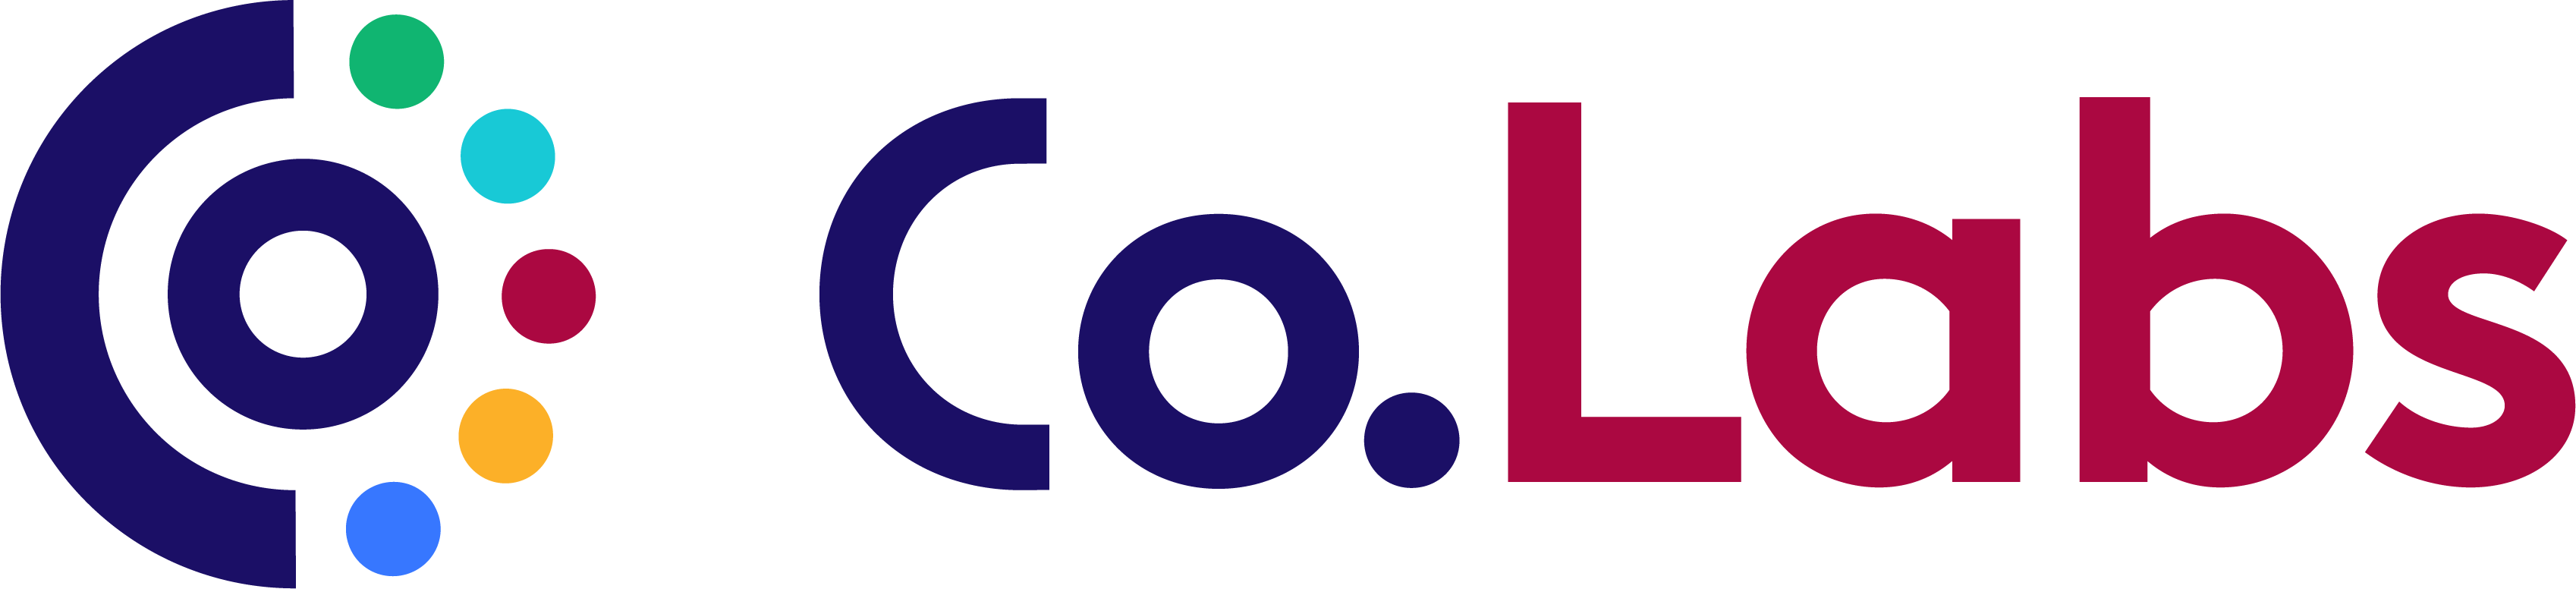 Co.labs Logo